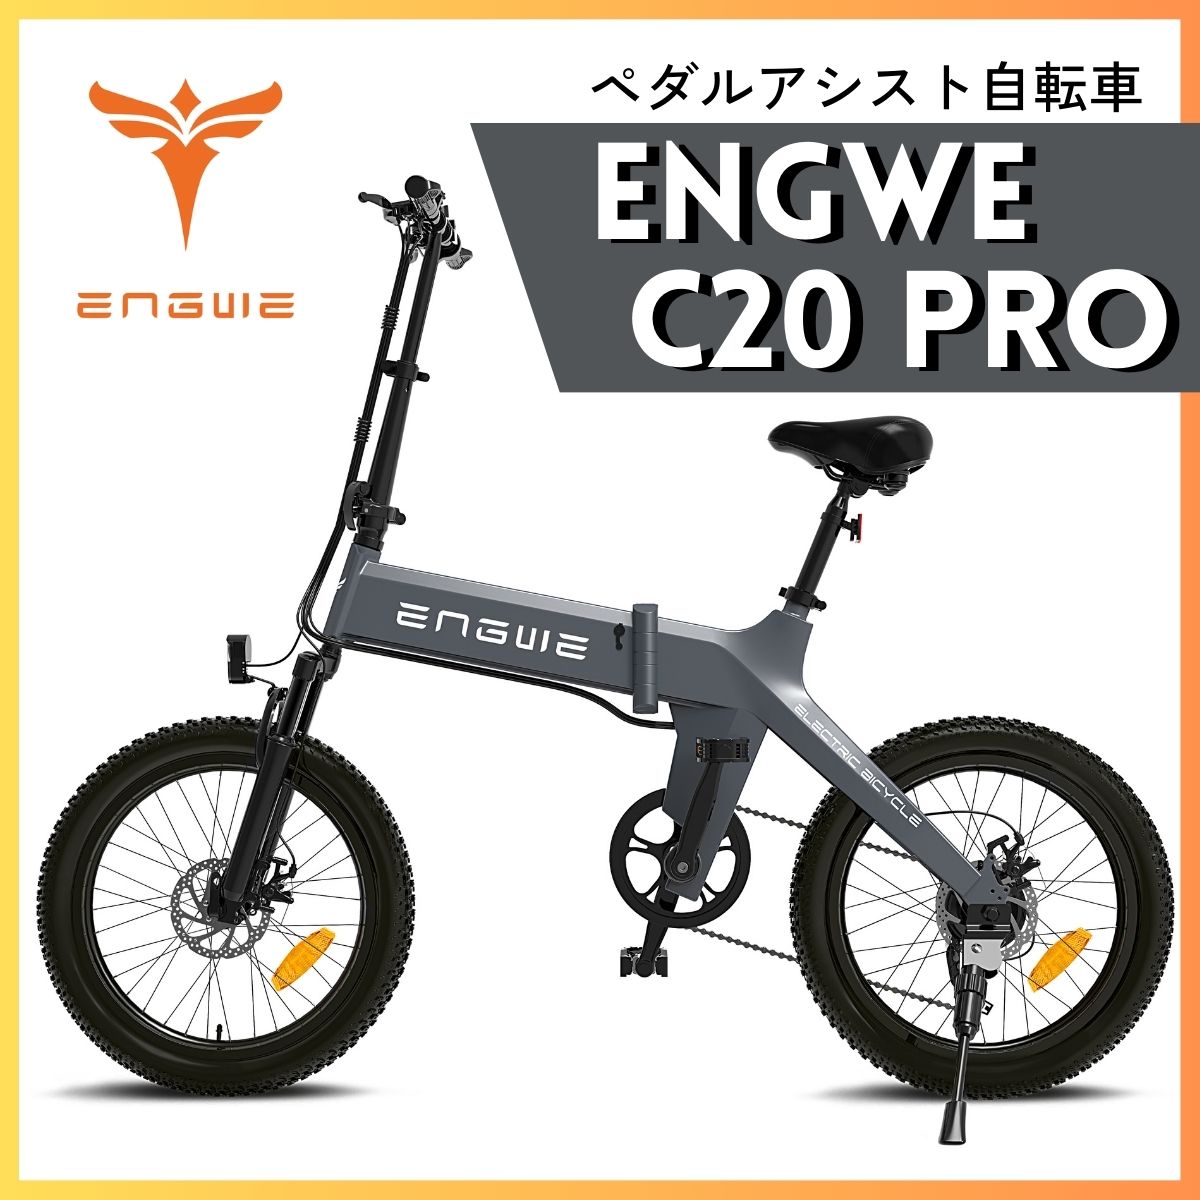 ENGWE C20 PRO専用 予備バッテリー